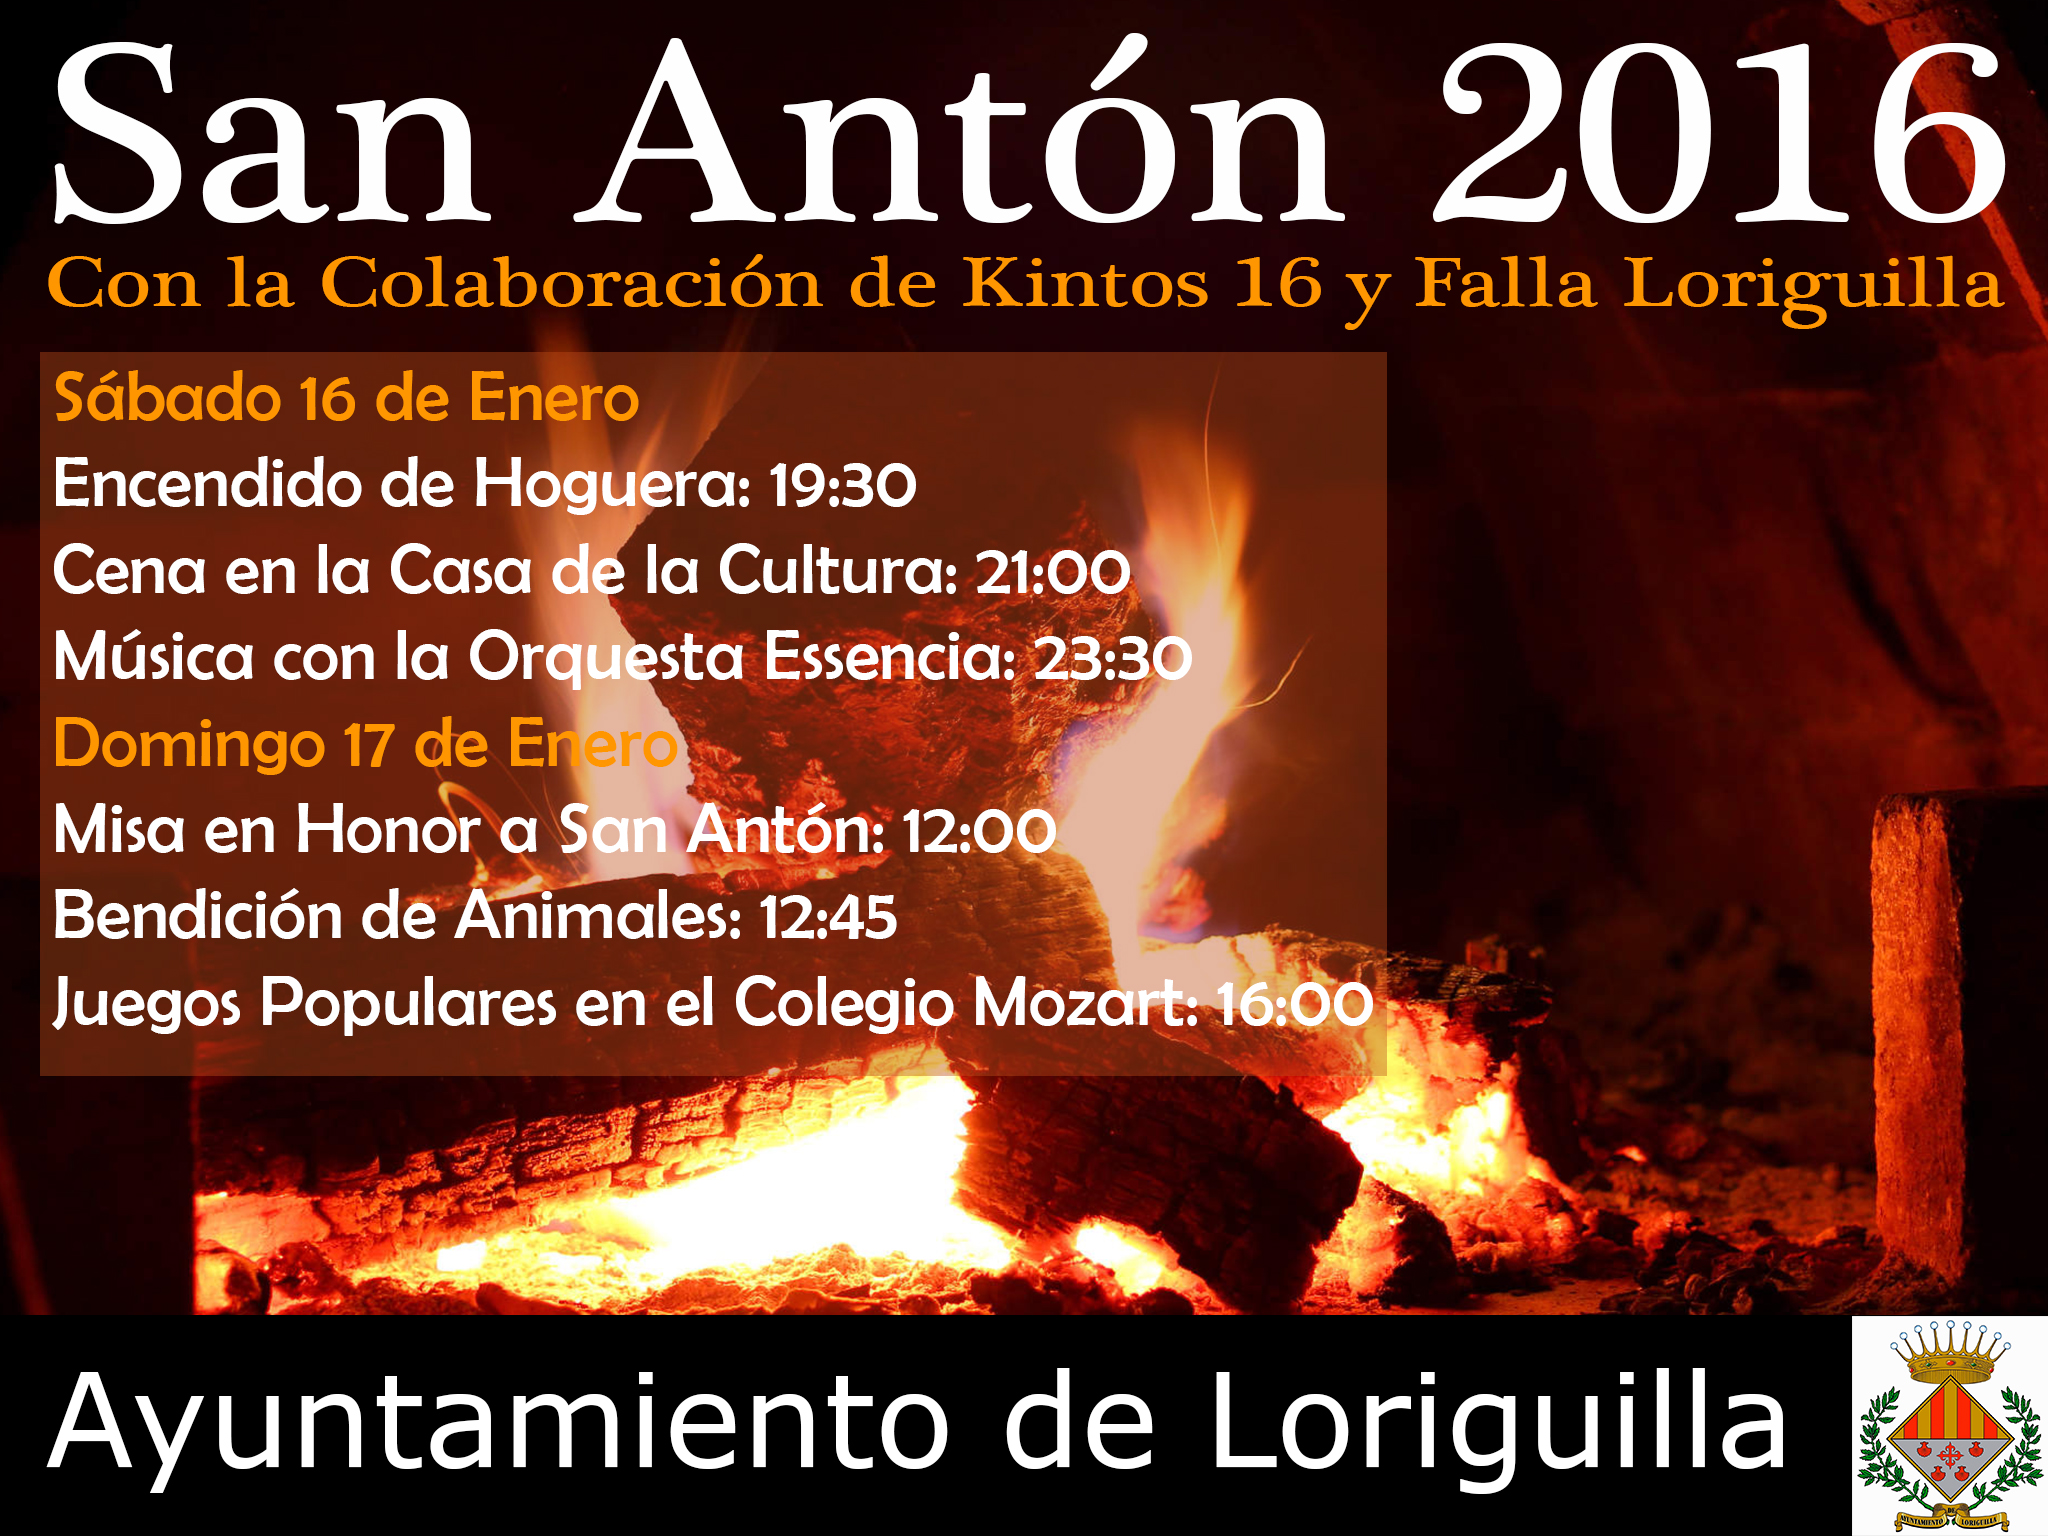 San Anton 2016